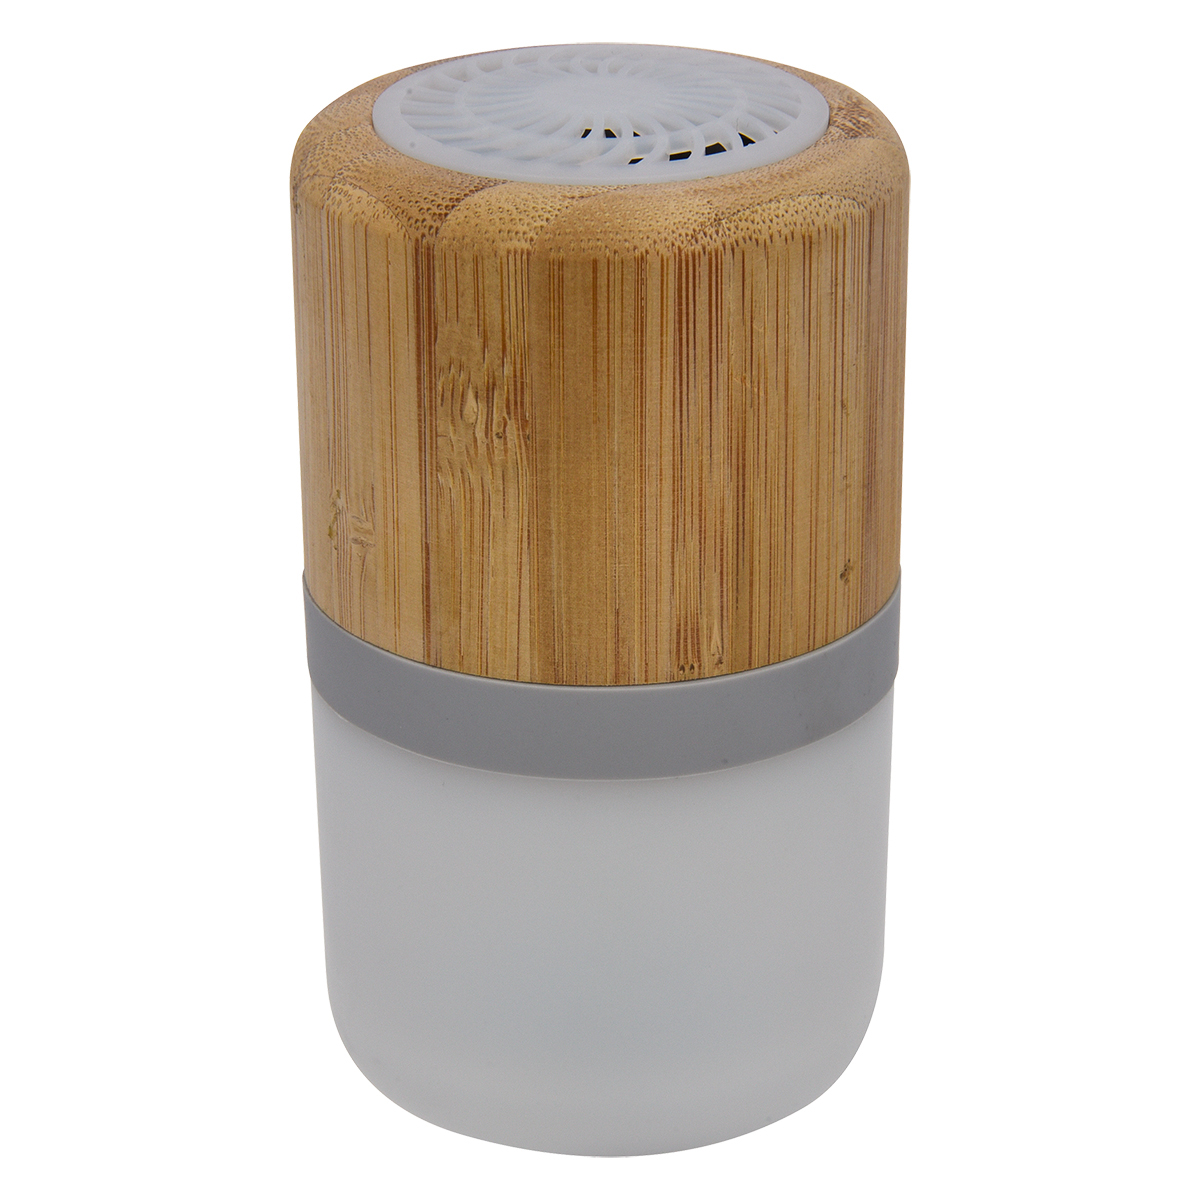 Bamboo and White Bamboo Wireless Light Up Speaker